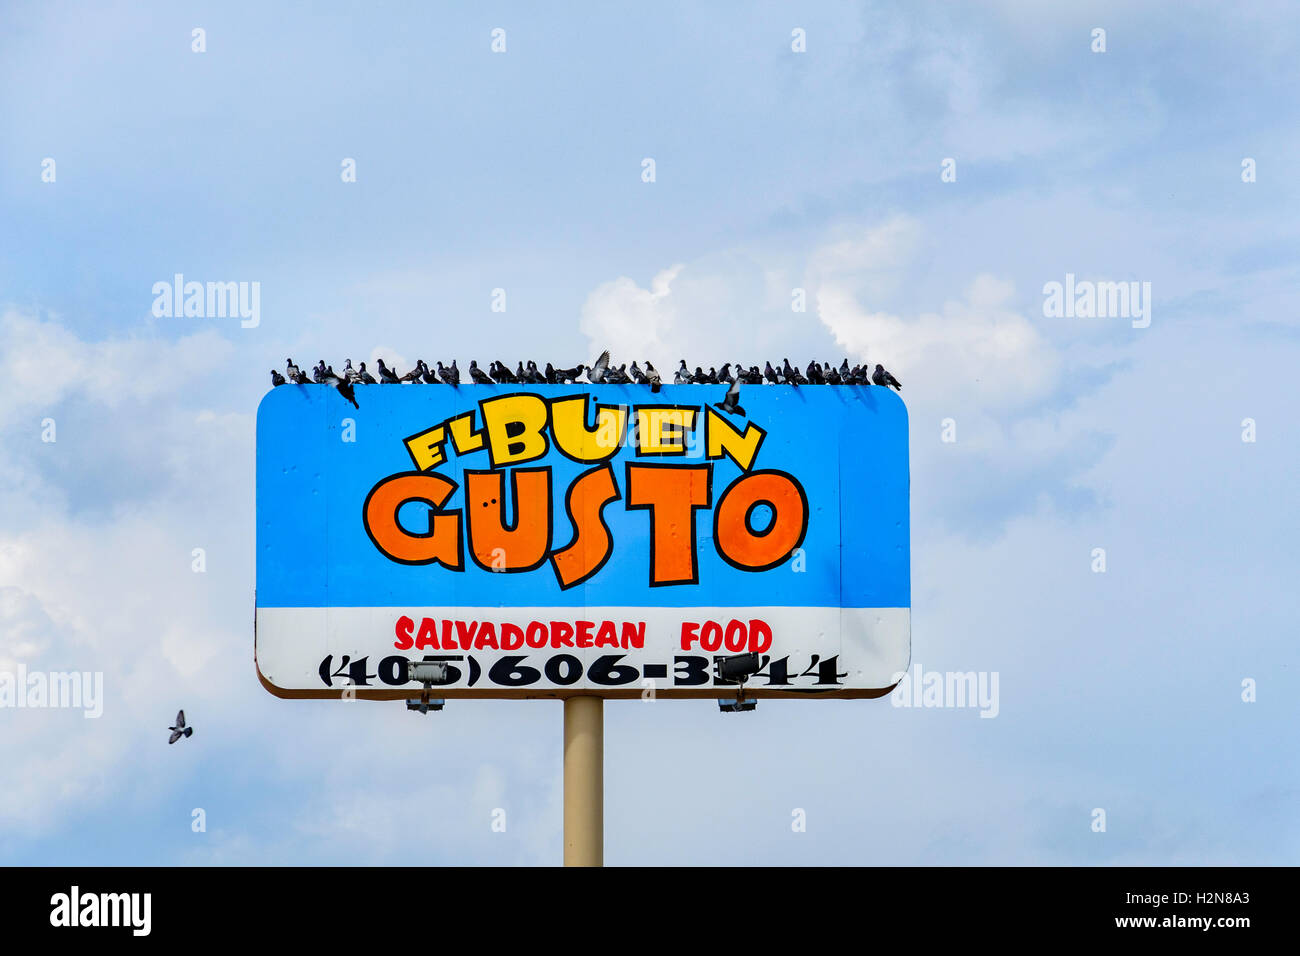 Pigeons or rock doves, Columba livia, flock on the pole sign of El Buen Gusto, 2116 SW 74th, Oklahoma City, Oklahoma, USA. Stock Photo